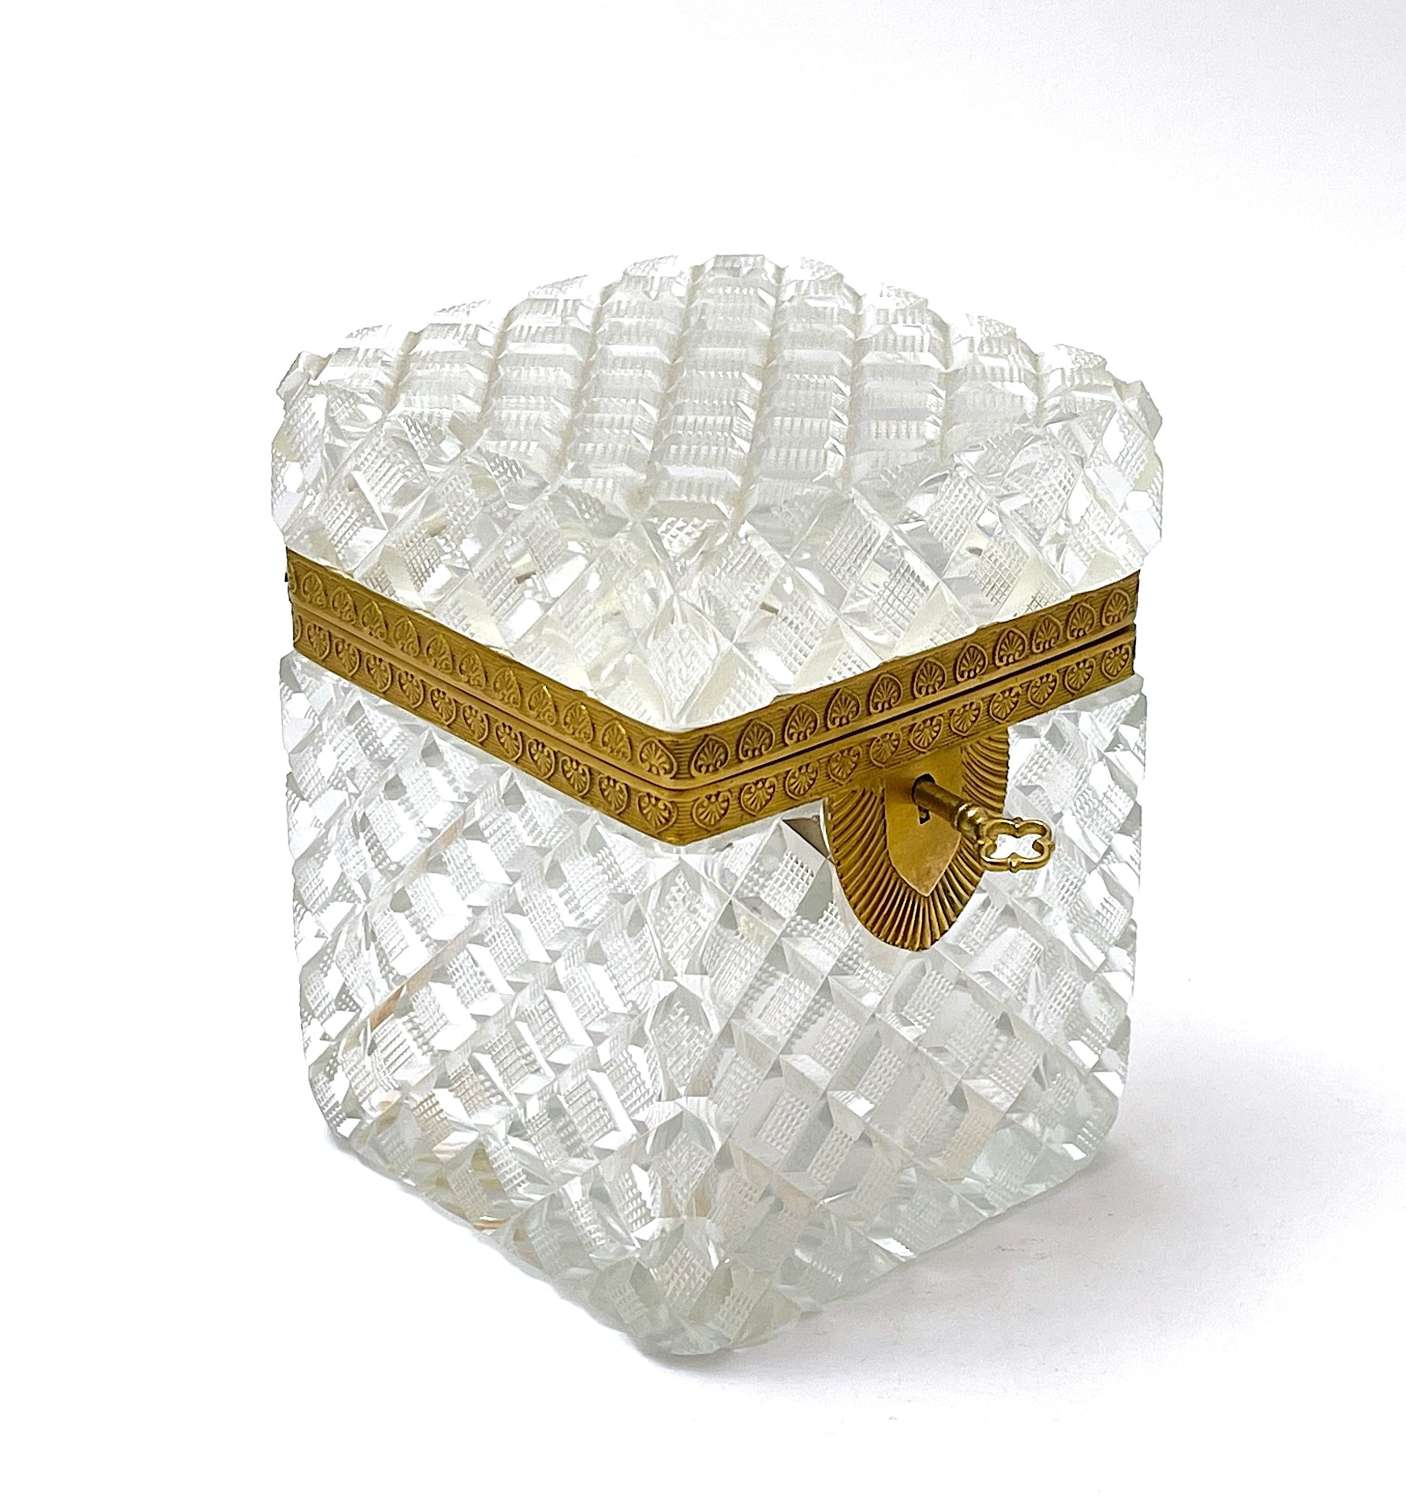 Antique Baccarat Cut Crystal Jewellery Casket Box 